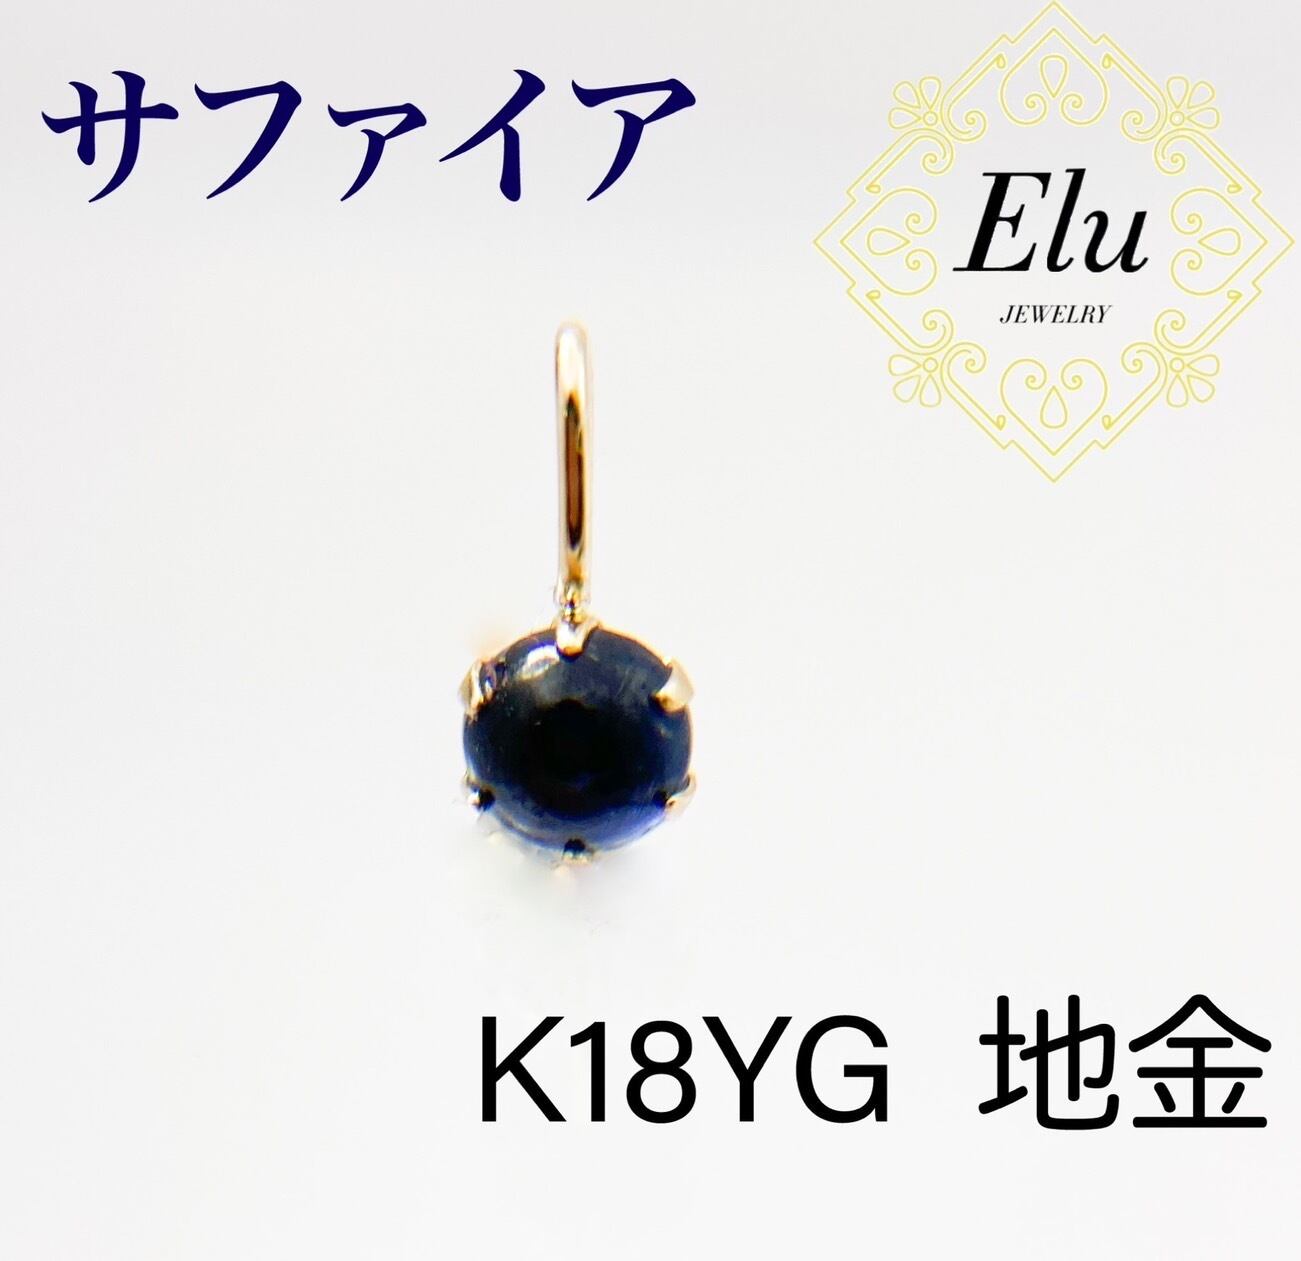 K18YG ペンダントトップ サファイア | Elu Jewelry